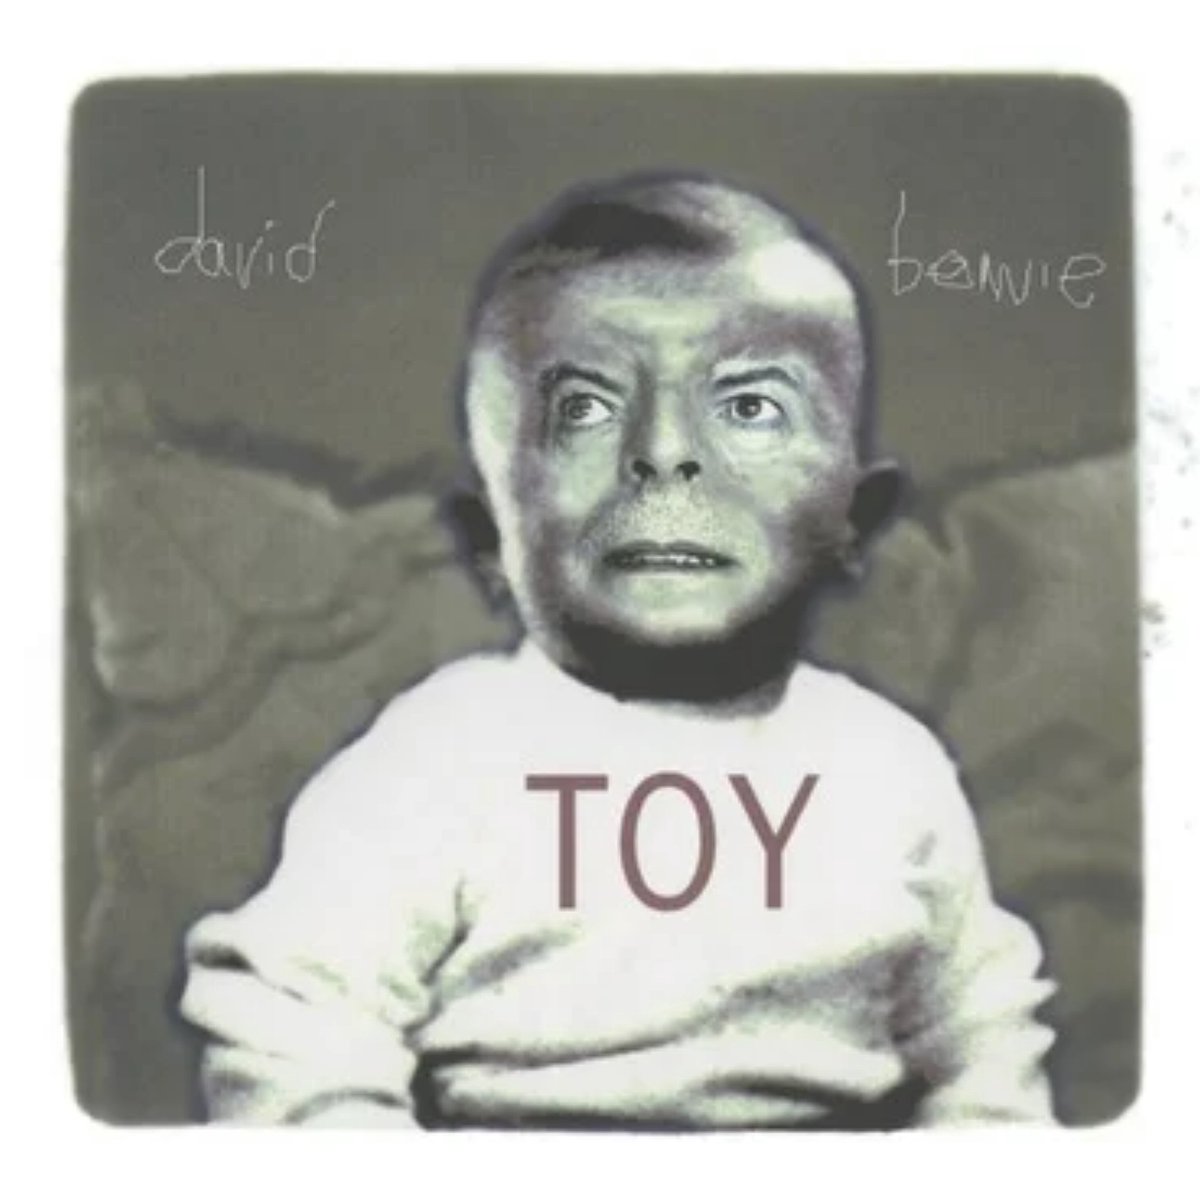 David Bowie - Toy E.P. (CD)